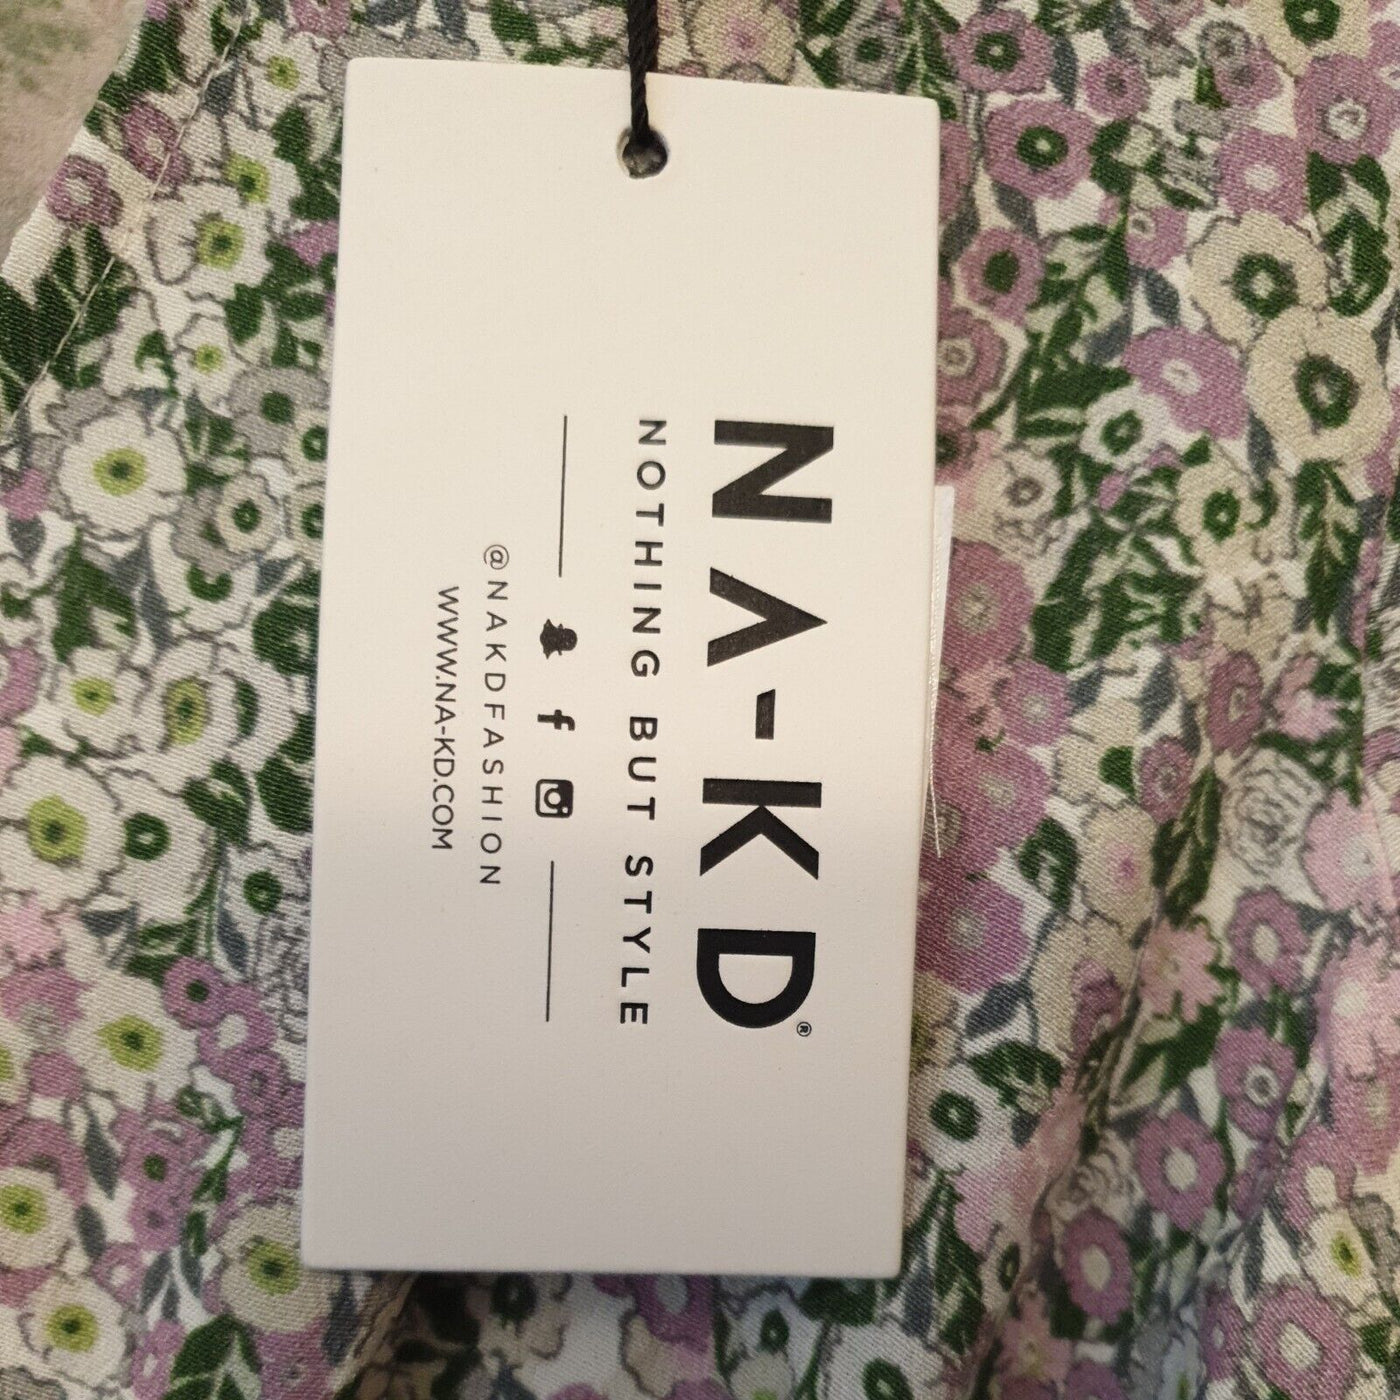 Na-kd Balloon Sleeve Maxi Frill Floral Dress Size 40/UK12 ****Ref V396